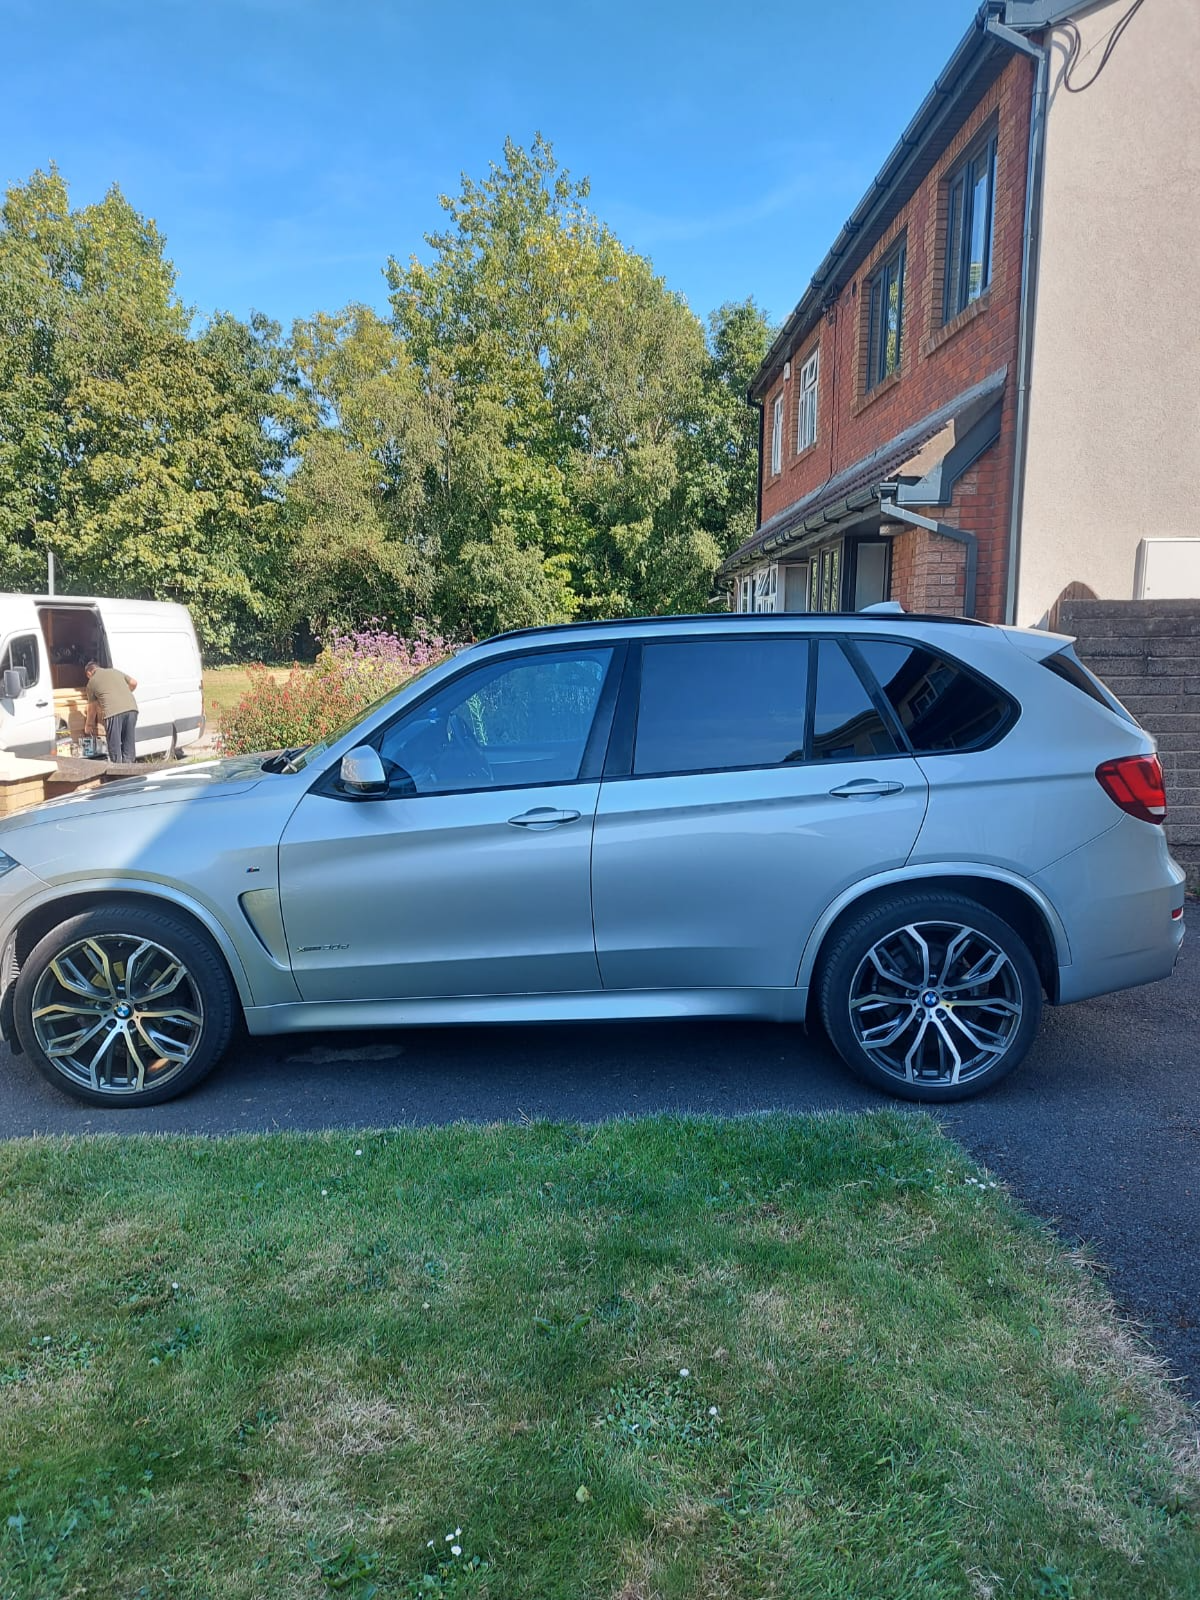 Used BMW X5 2015 in Dublin